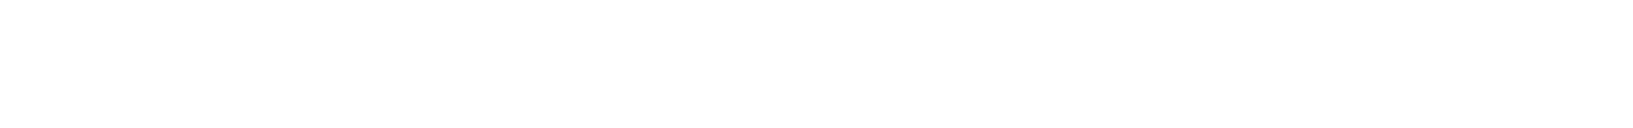 Responsive logo muestra, Blacksuit